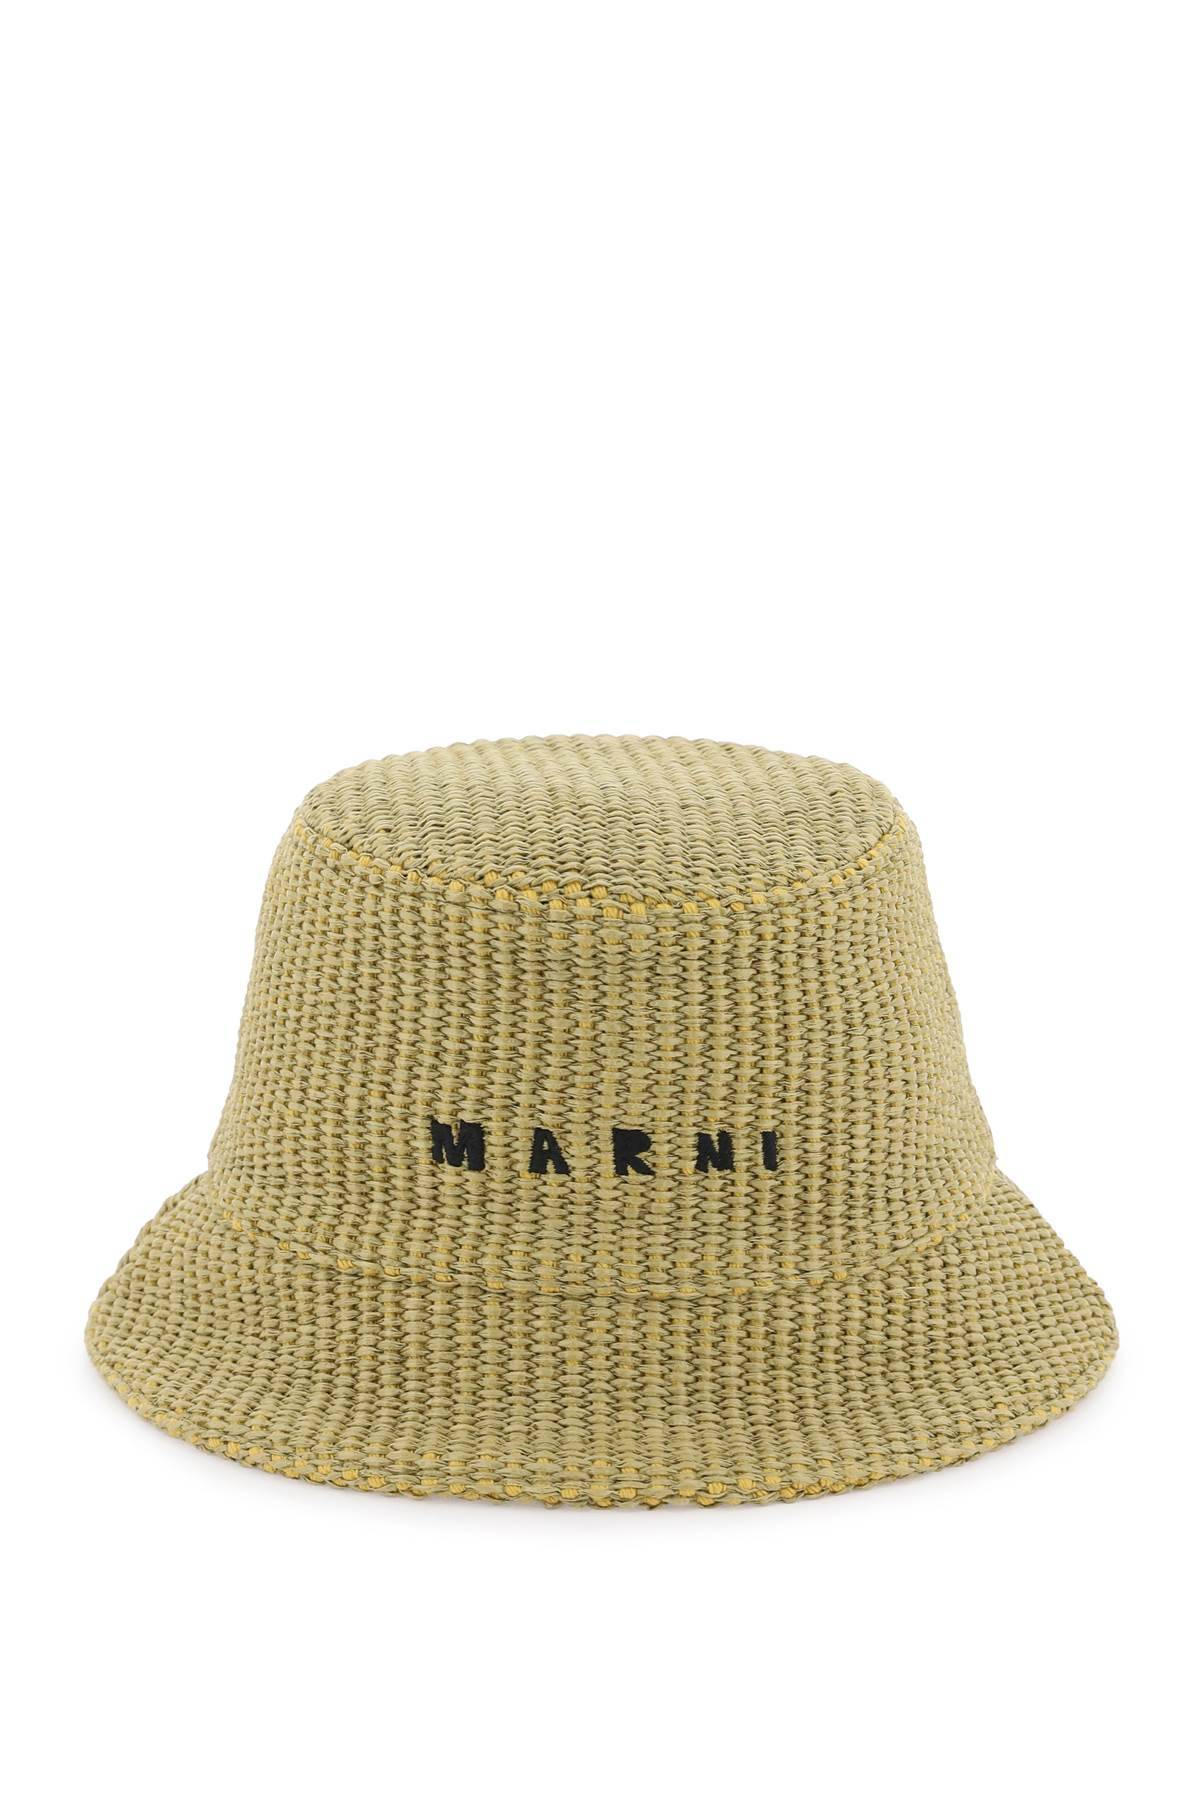 Marni MARNI raffia effect bucket hat